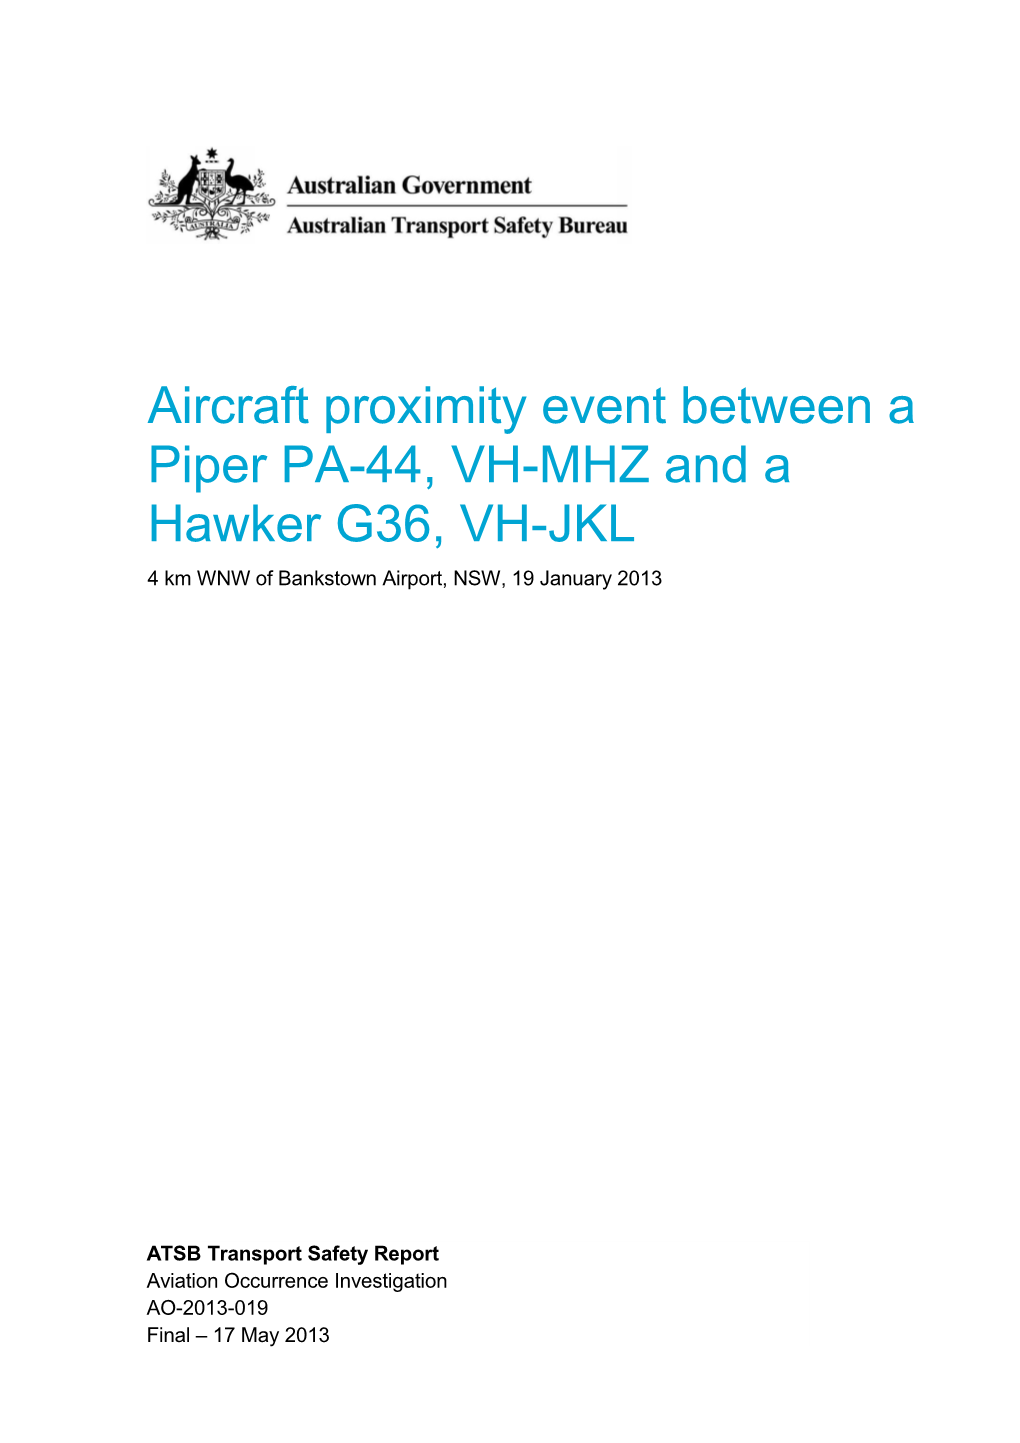 Aircraft Proximity Event Between a Piper PA-44, VH-MHZ and a Hawkerg36, VH-JKL